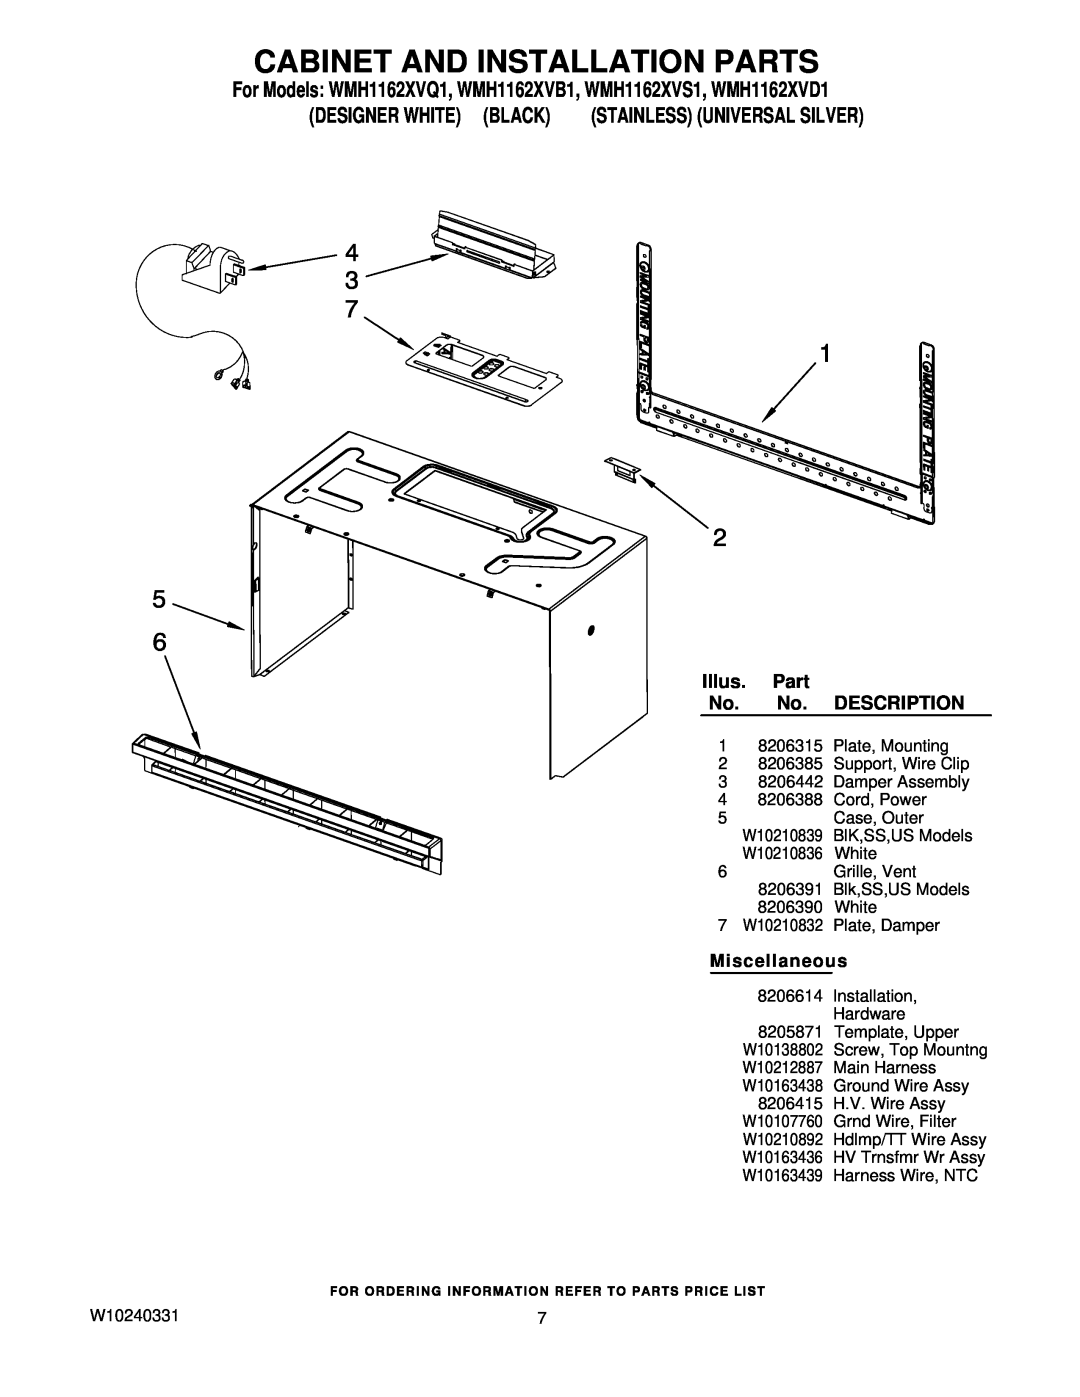 Whirlpool WMH1162XVQ1 manual Cabinet And Installation Parts, Illus. Part, Miscellaneous, Designer White Black, Description 